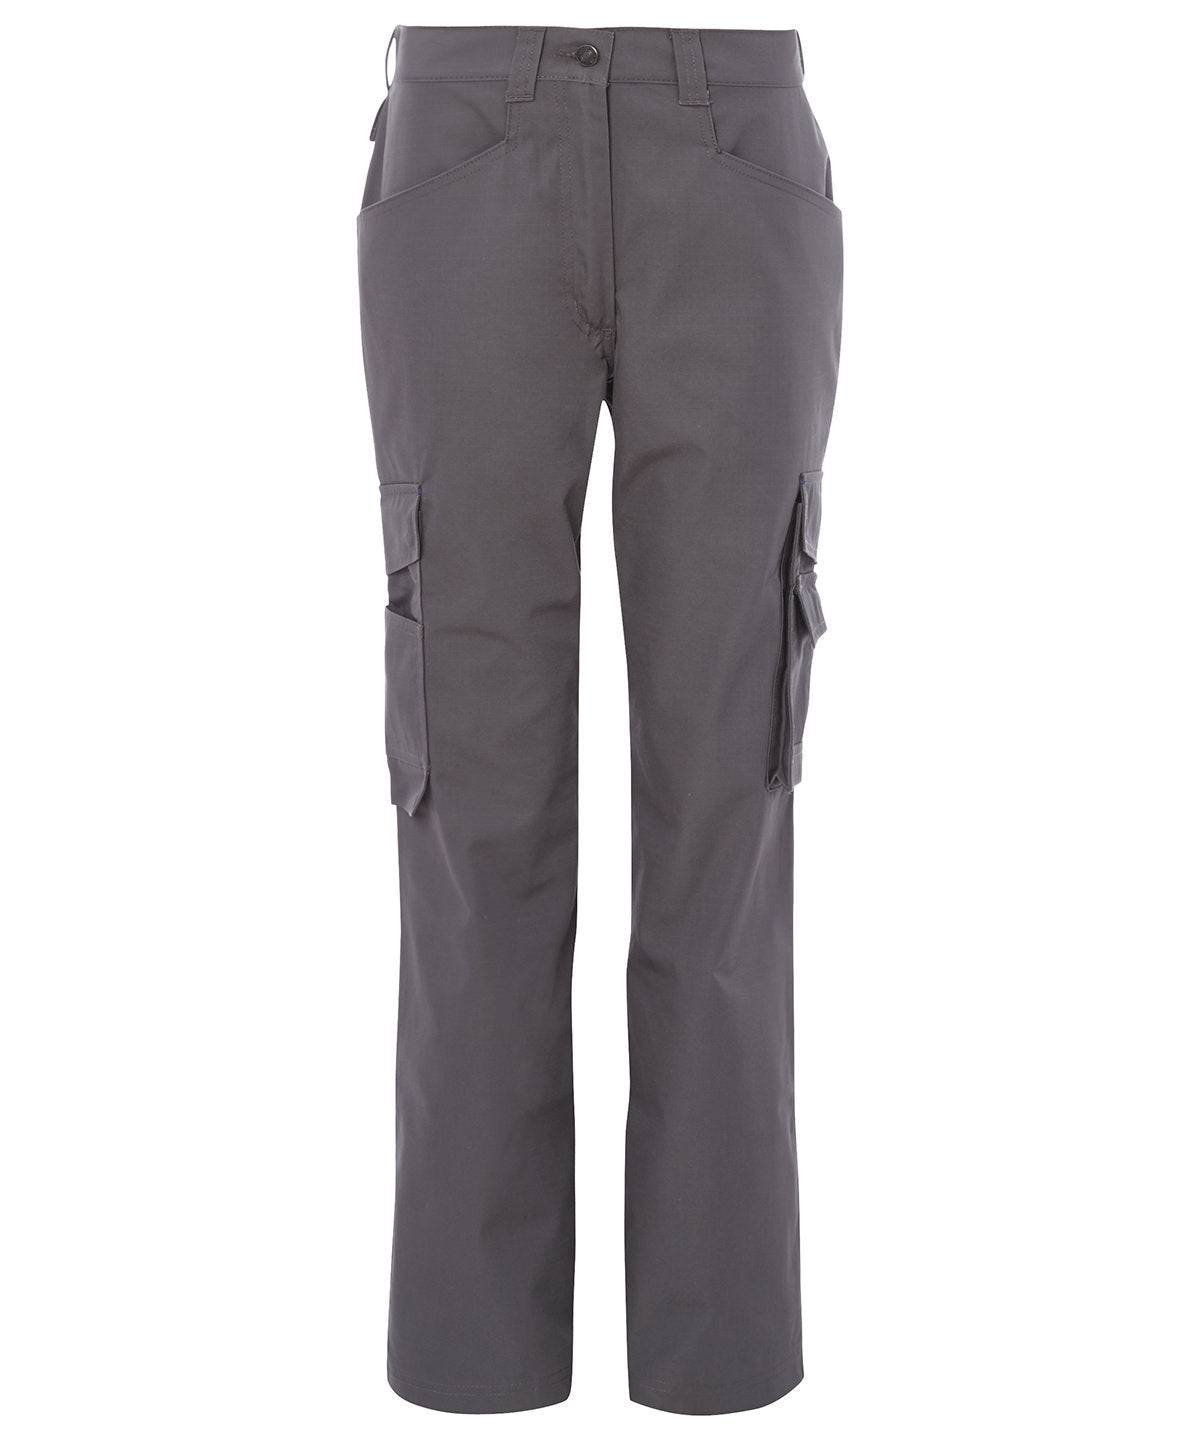 Grey - Women's tungsten service trousers